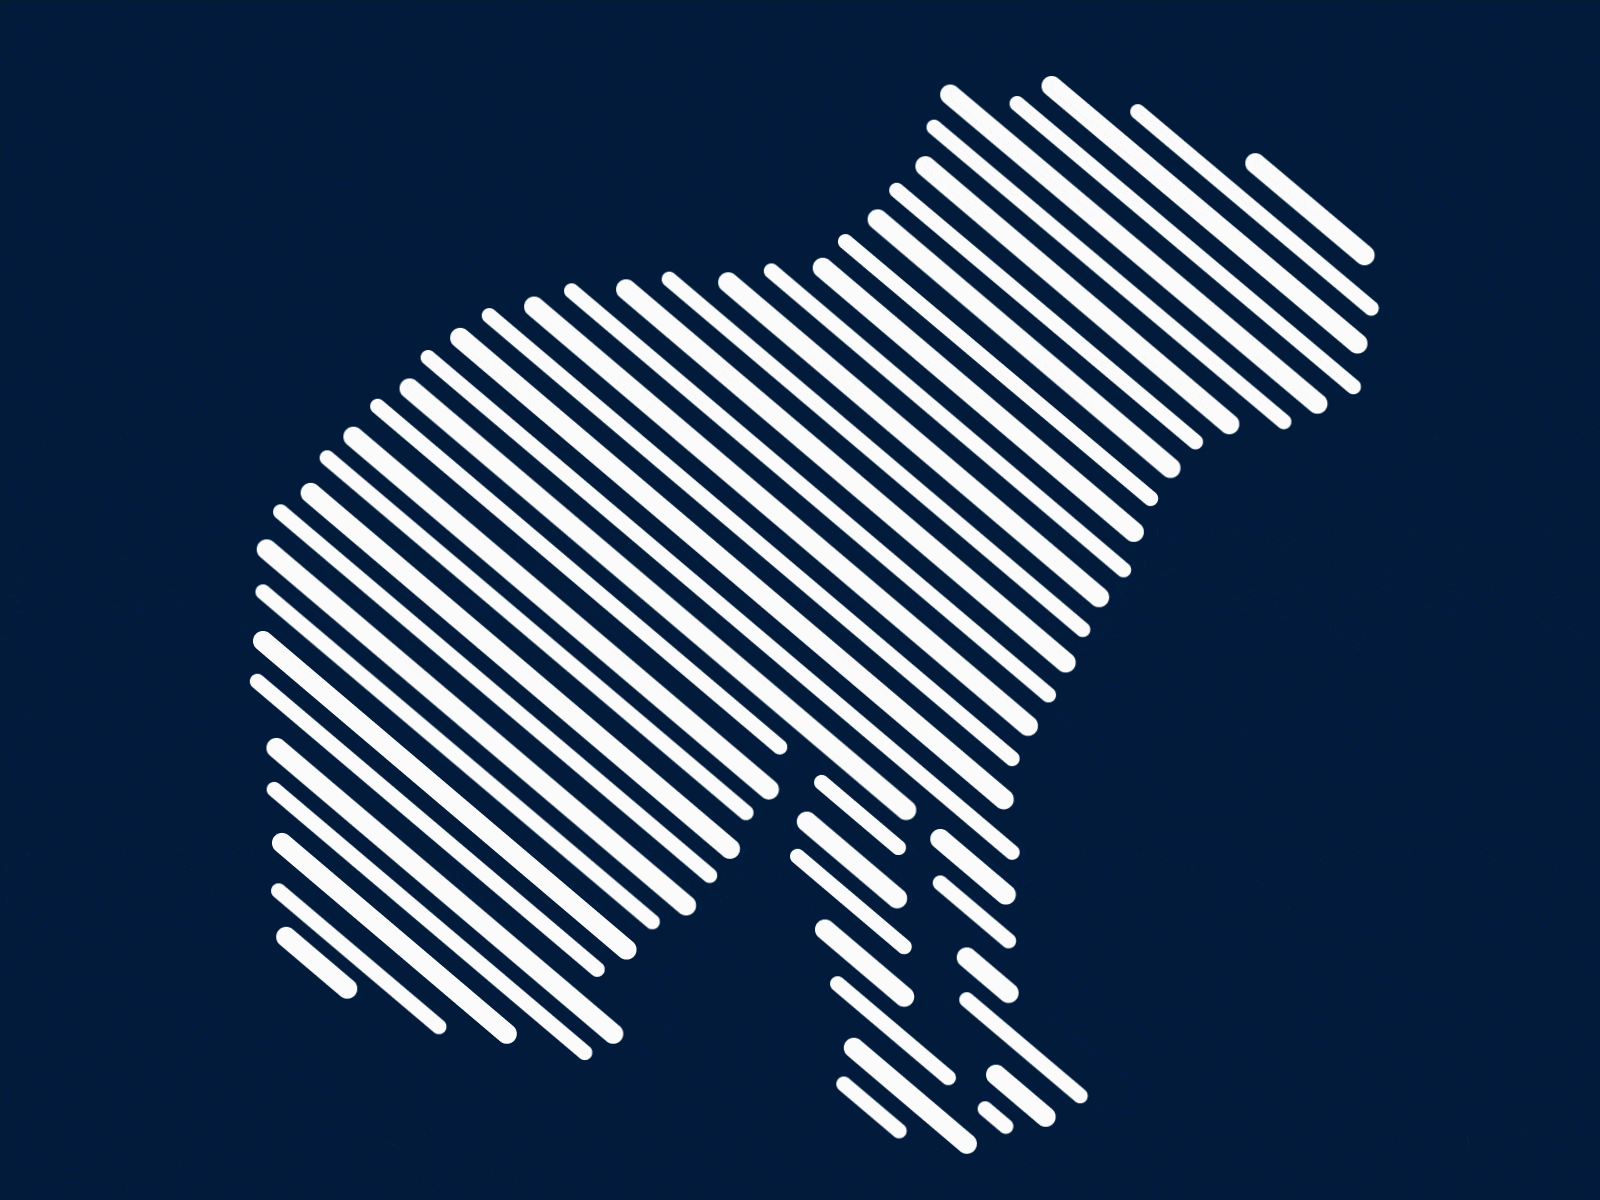 Capybara 🤟 [loader & animate logo]